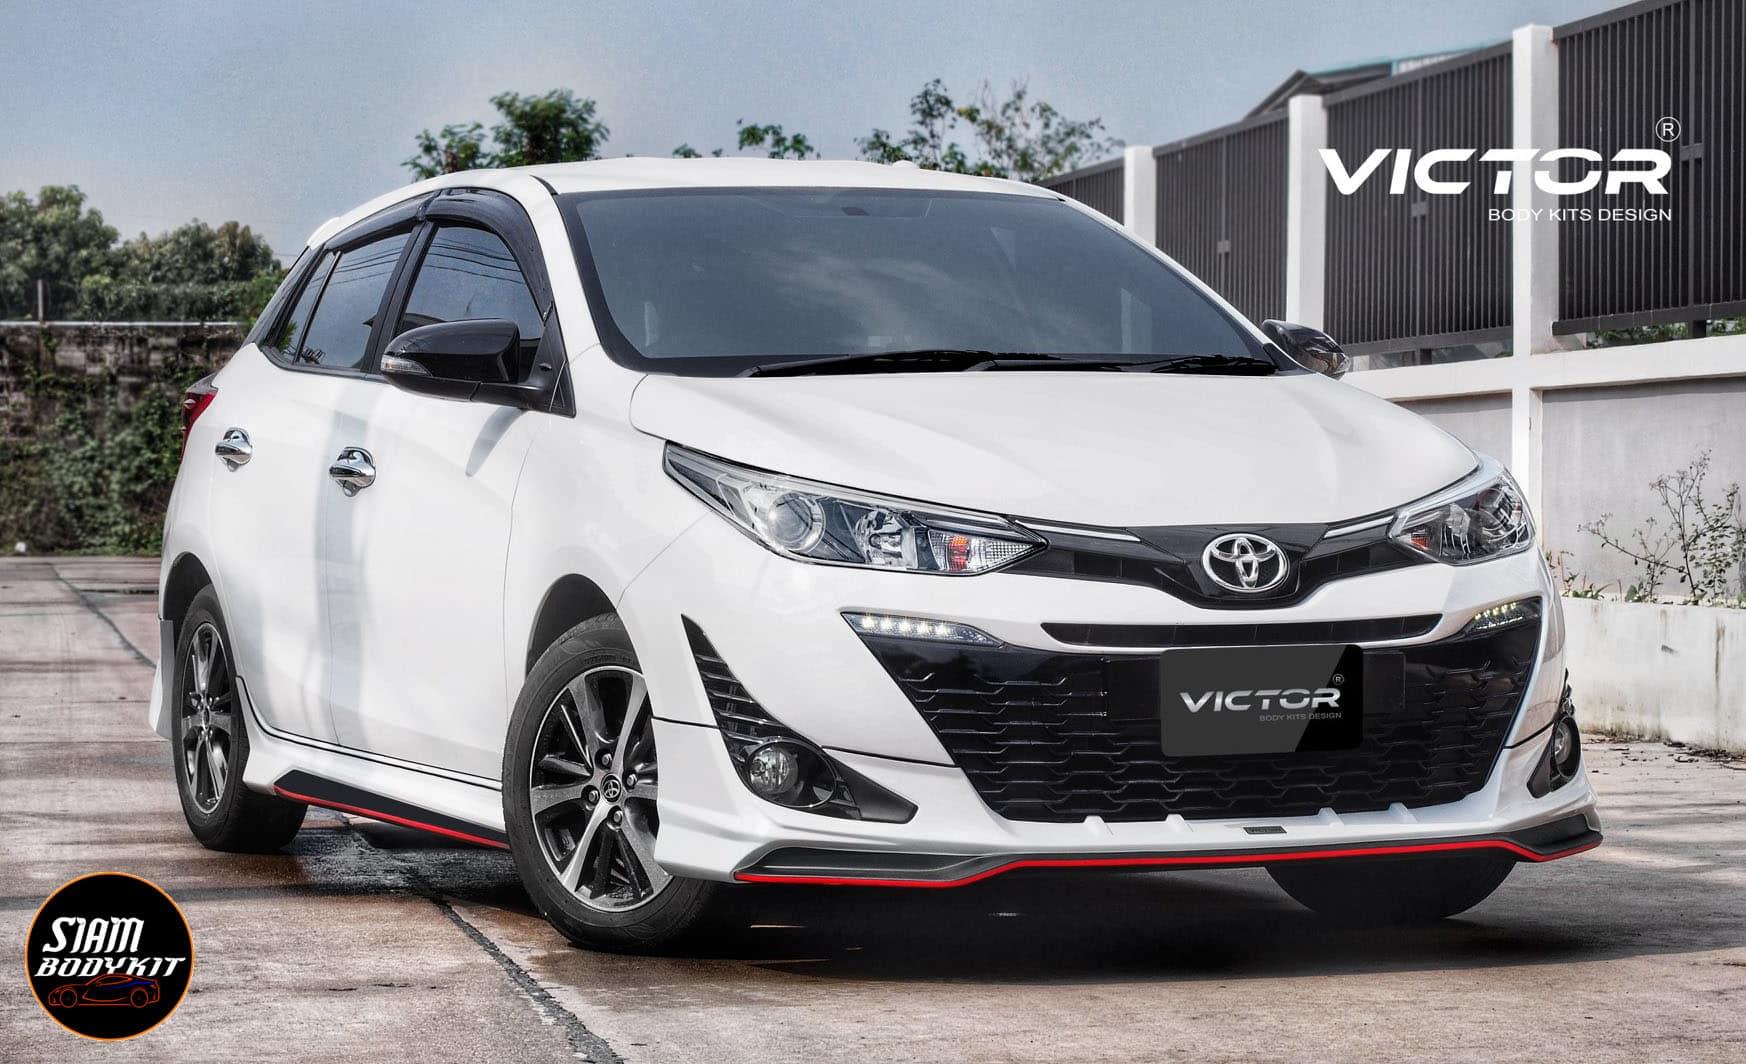 Victor Bodykit for Toyota Yaris Hatchback 2017-2019 (COLOR)